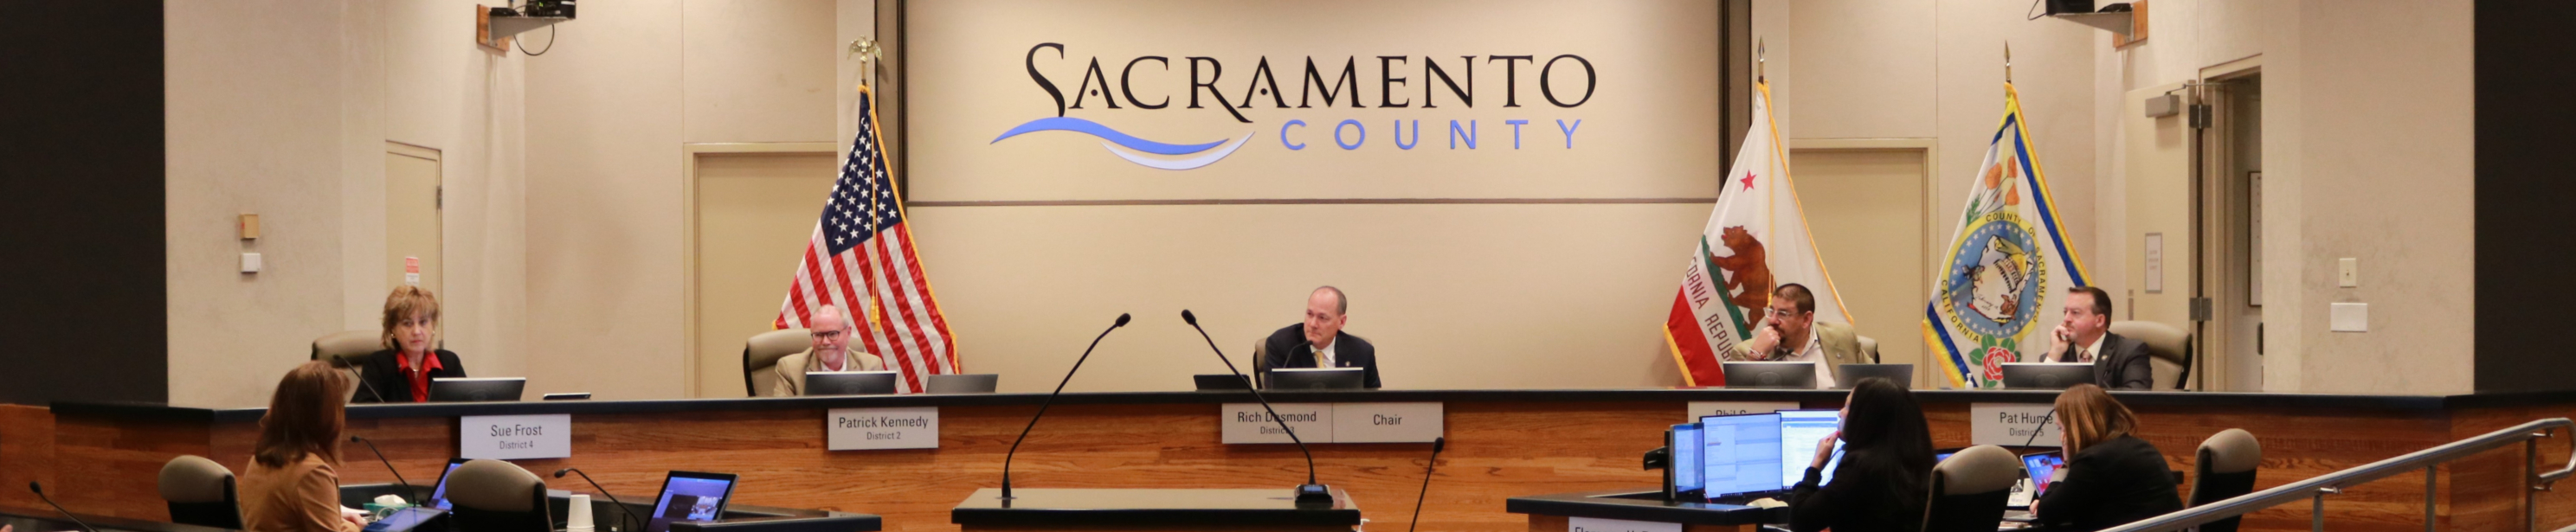 Sacramento County Board of Supervisors